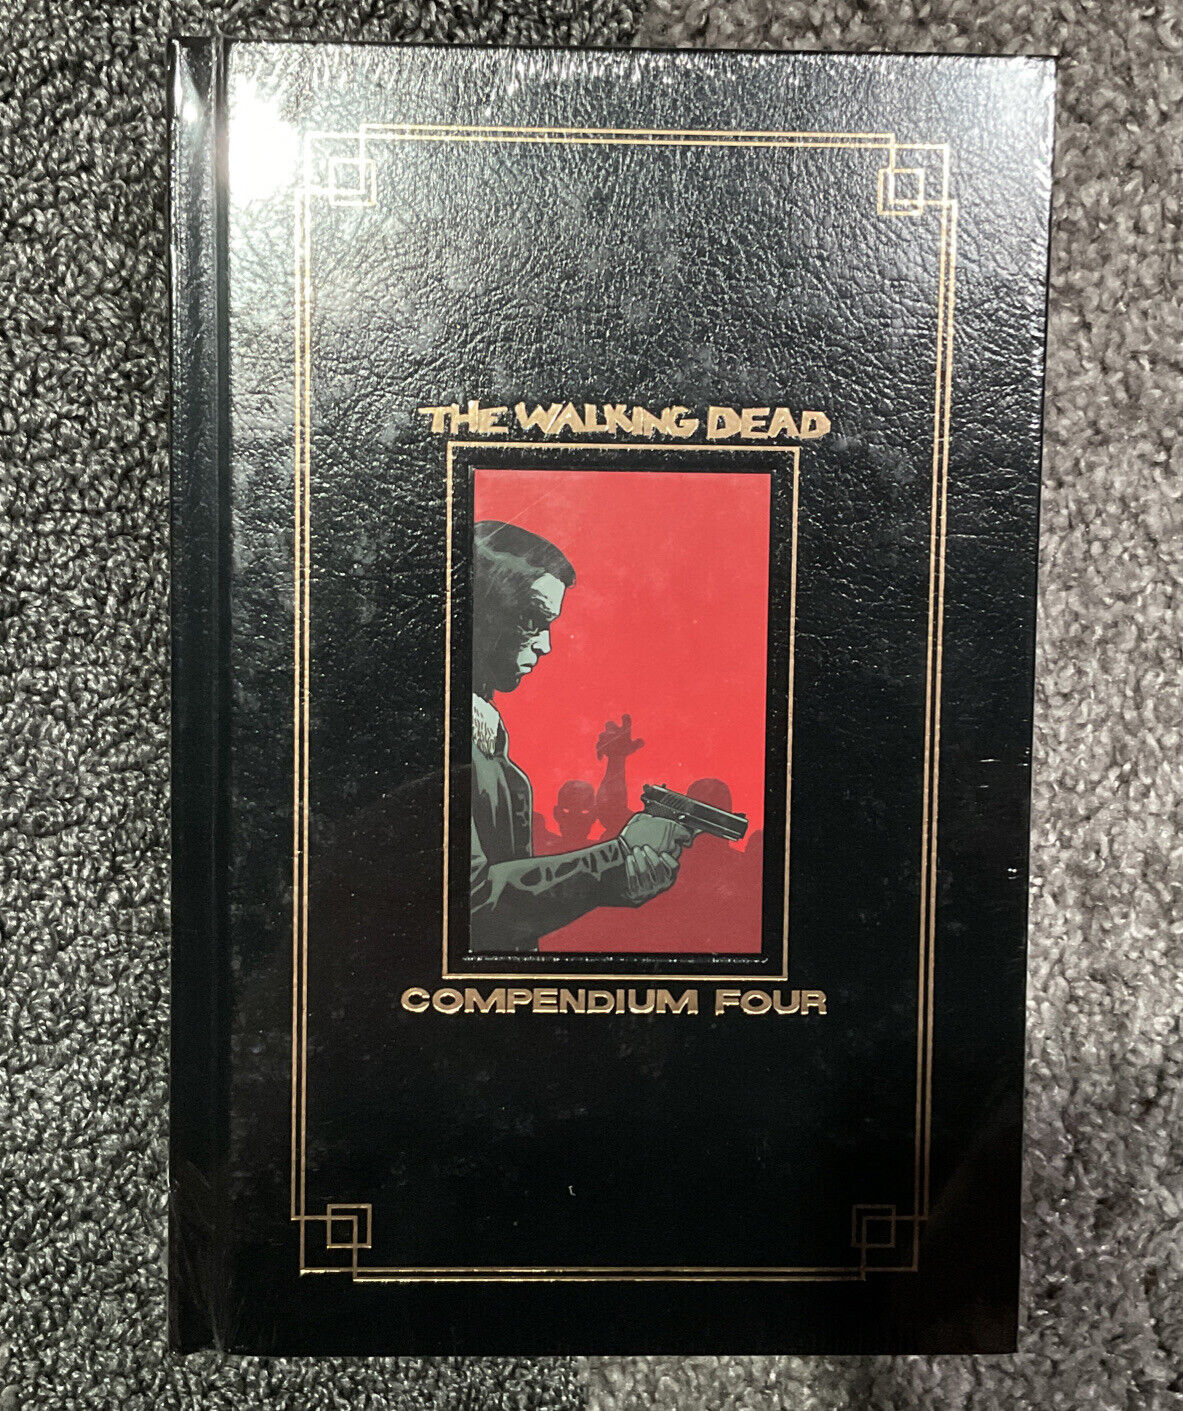 THE WALKING DEAD COMPENDIUM Volume 4 Hardcover Gold Foil